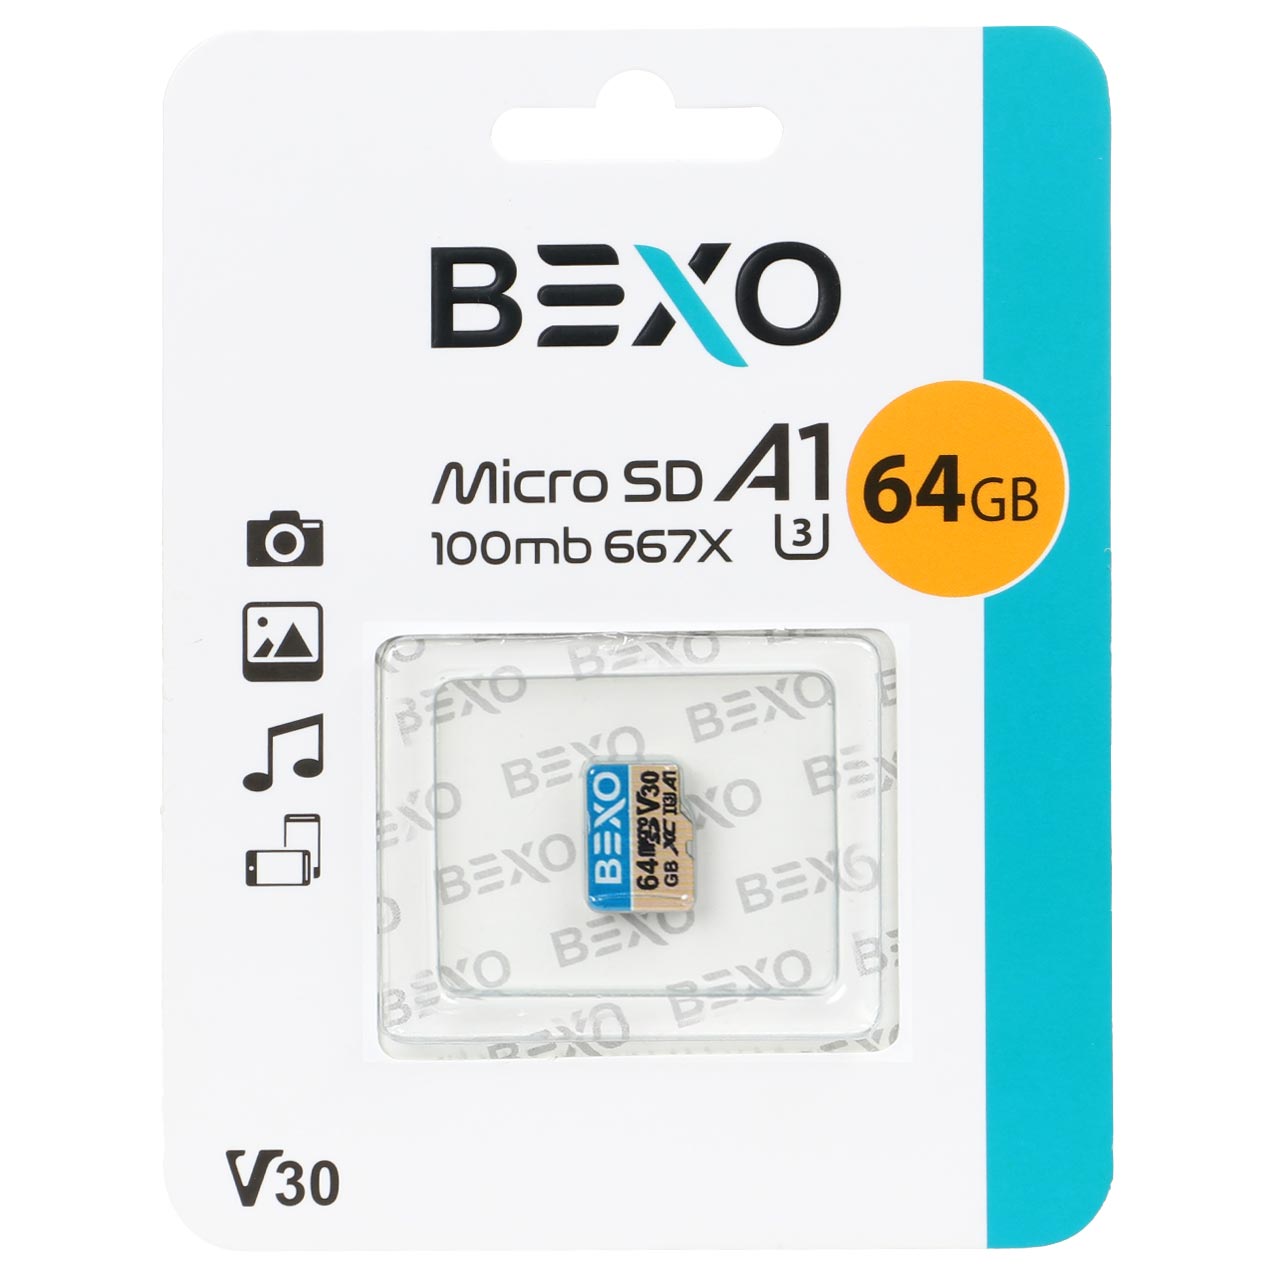 BEXO 667X microSDXC UHS-I U3 Class10-100MB/s - 64GB (گارانتی داده پردازی آواتک)